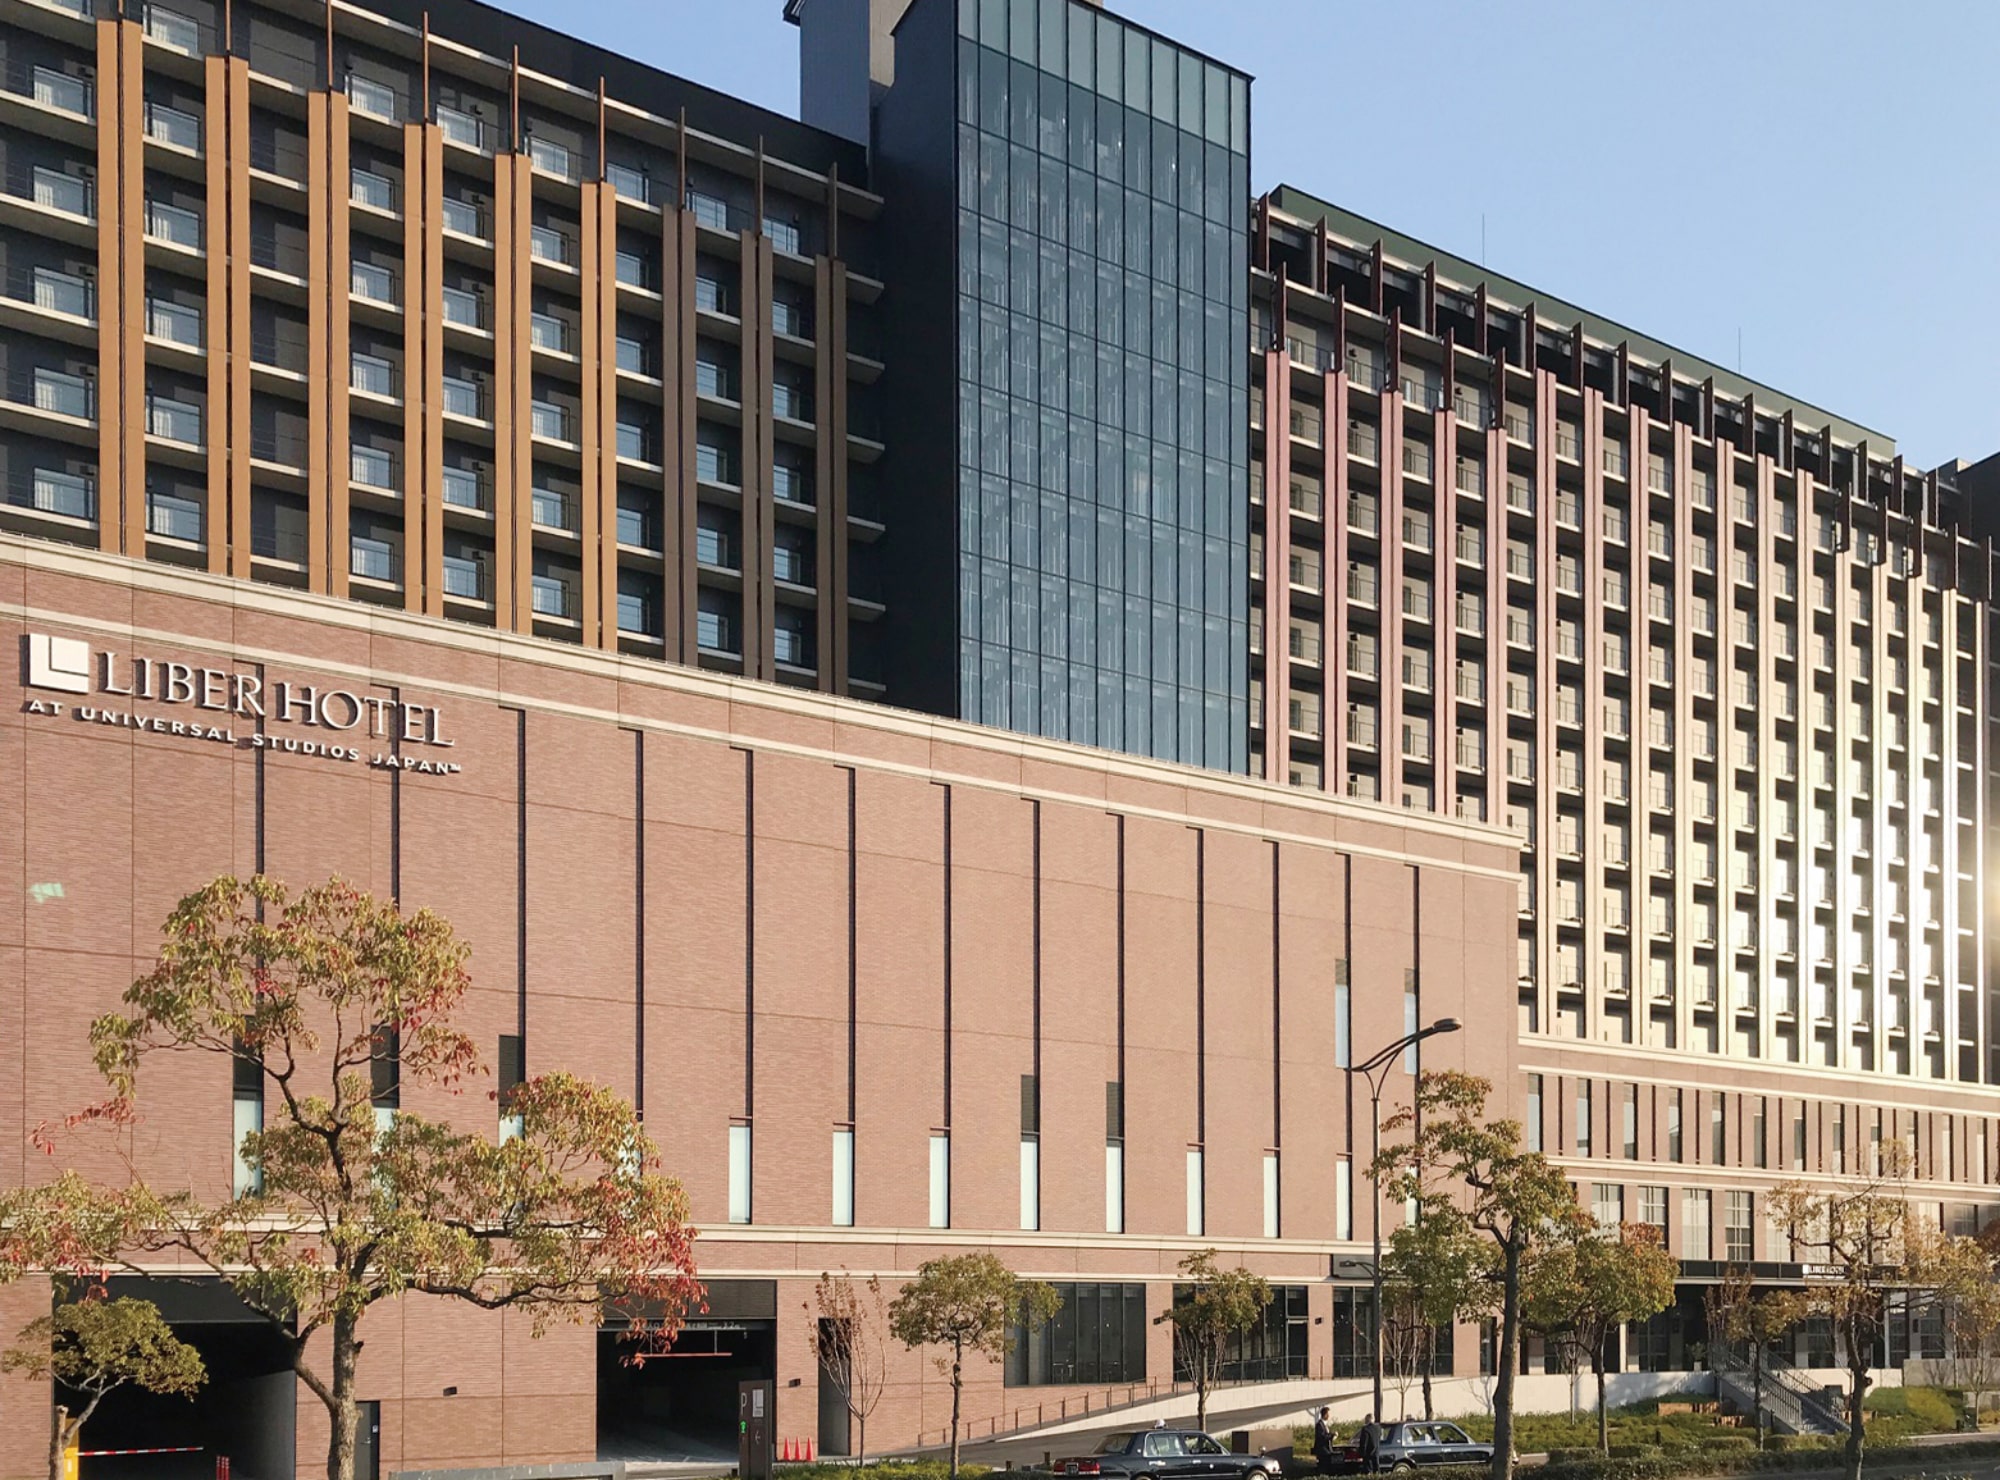 Rホテル アット ユニバーサル・スタジオ・ジャパン01